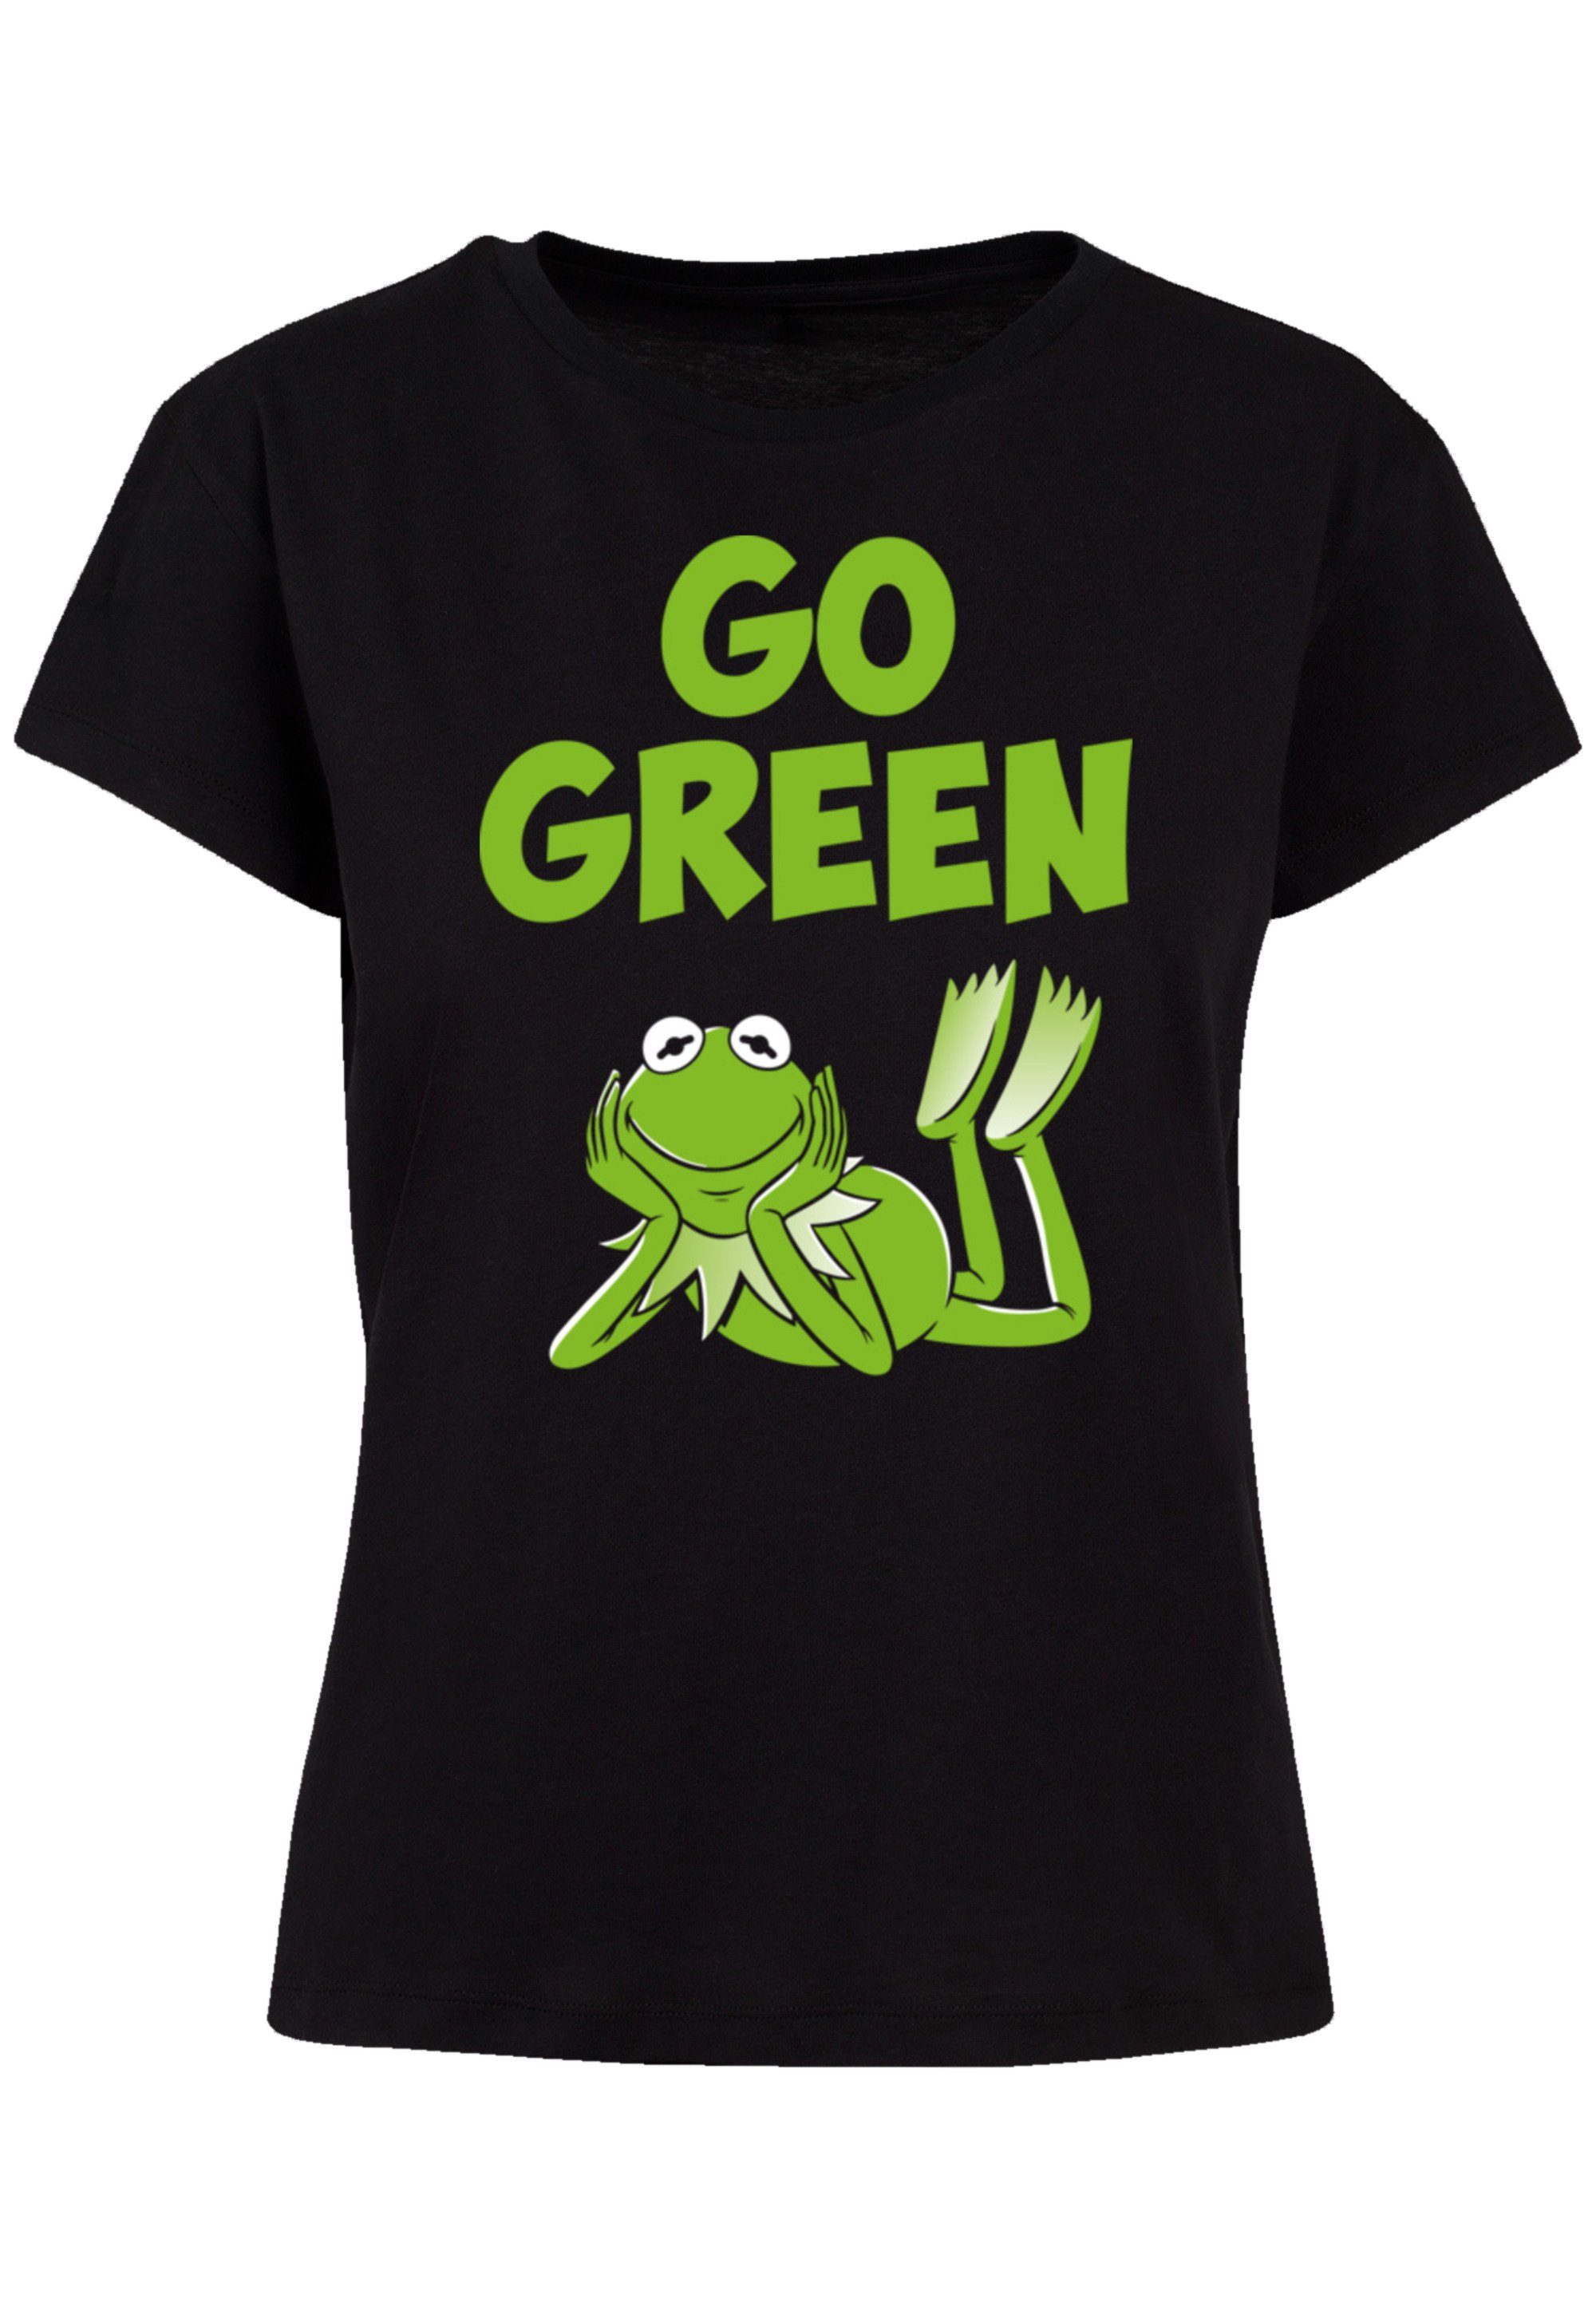 F4NT4STIC T-Shirt Premium Muppets Green Qualität Go Disney